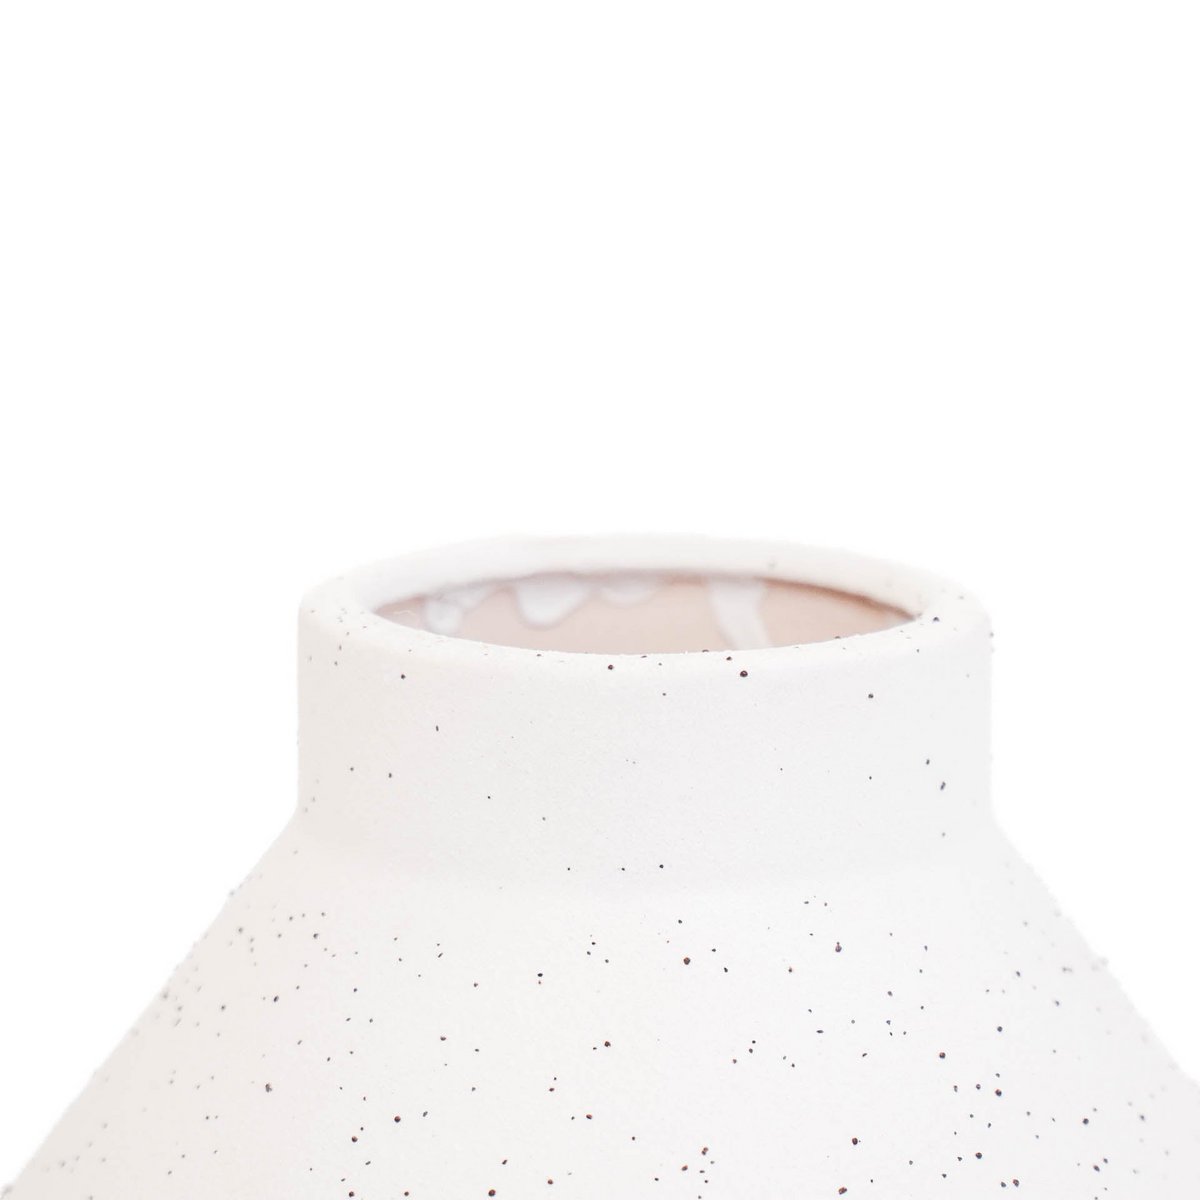 HV Organic Shape Vase - White -13x13x22